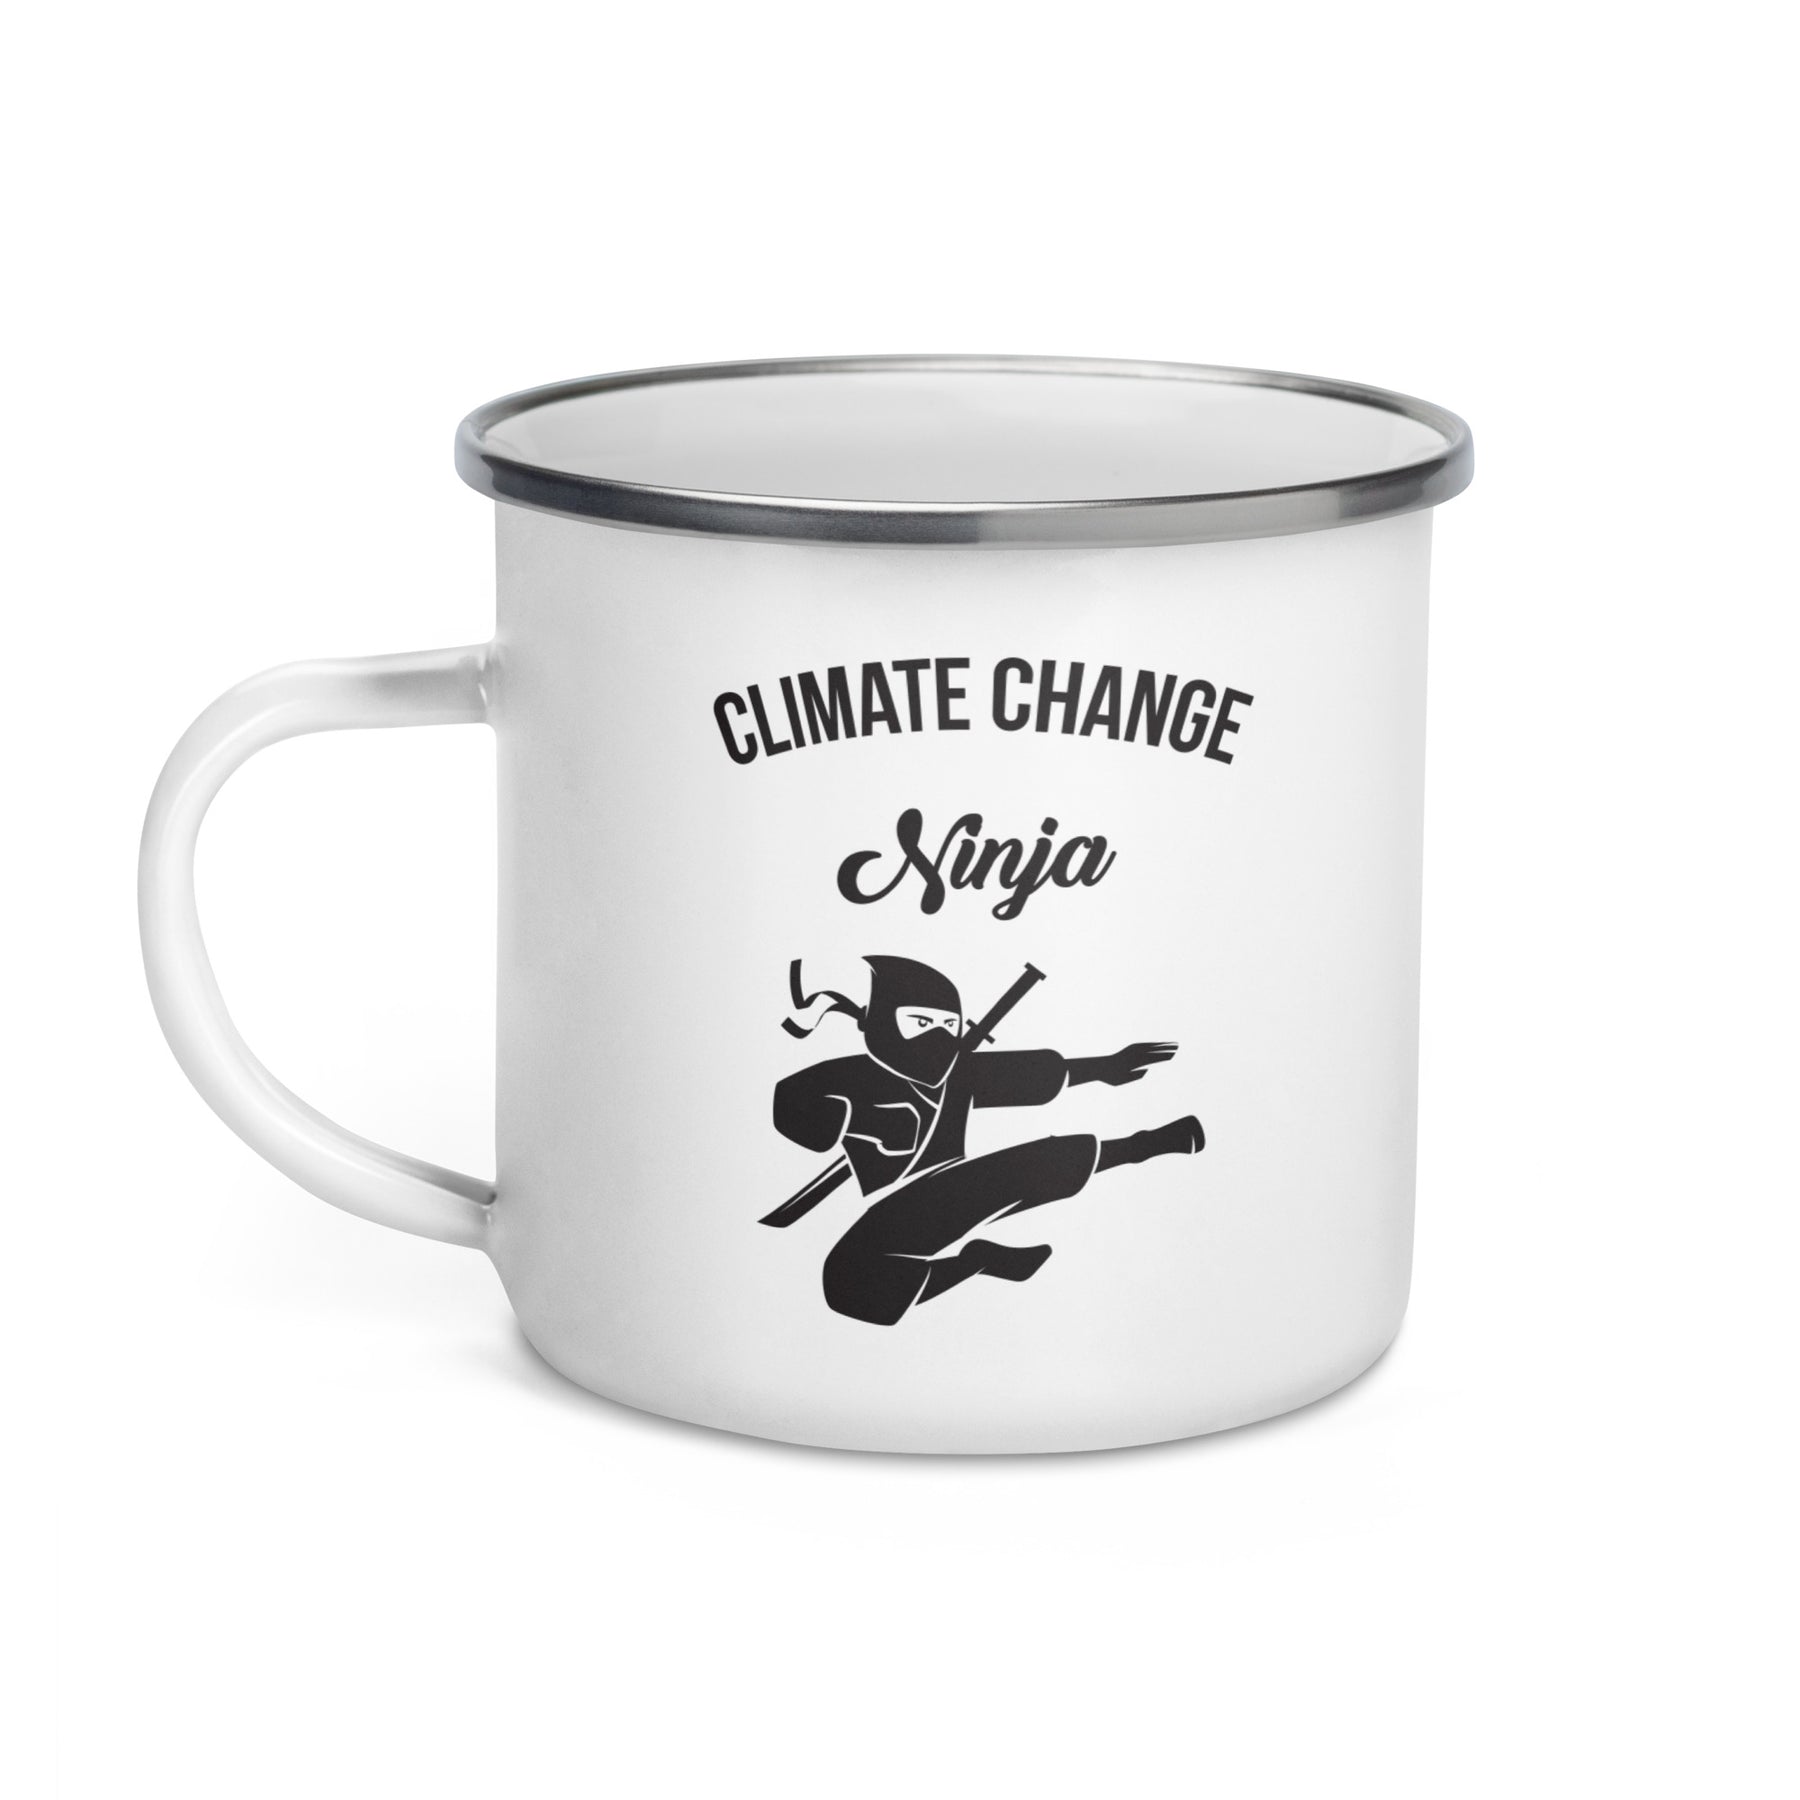 CLIMATE CHANGE NINJA Enamel Mug